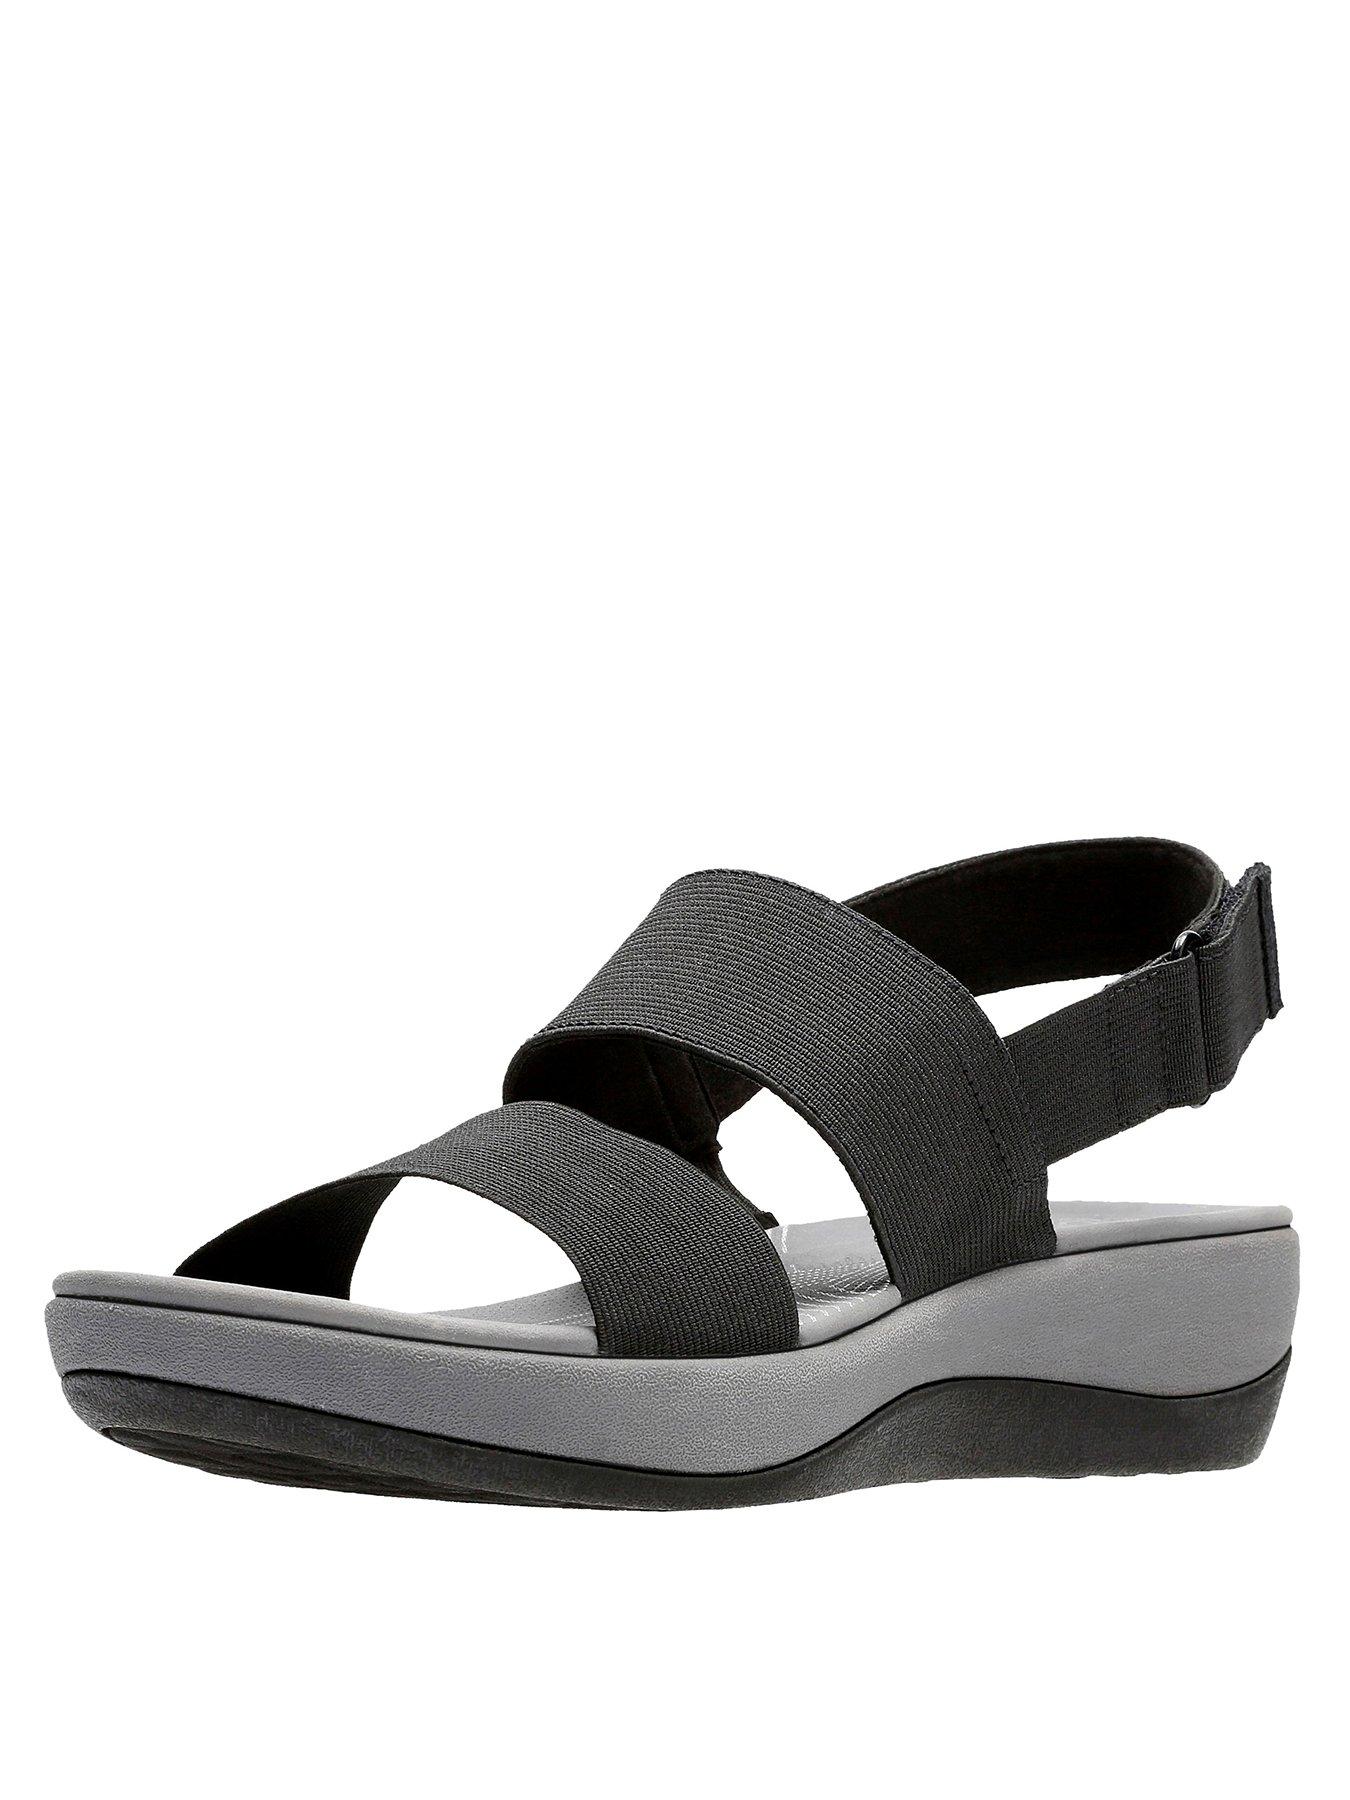 clarks black sandals